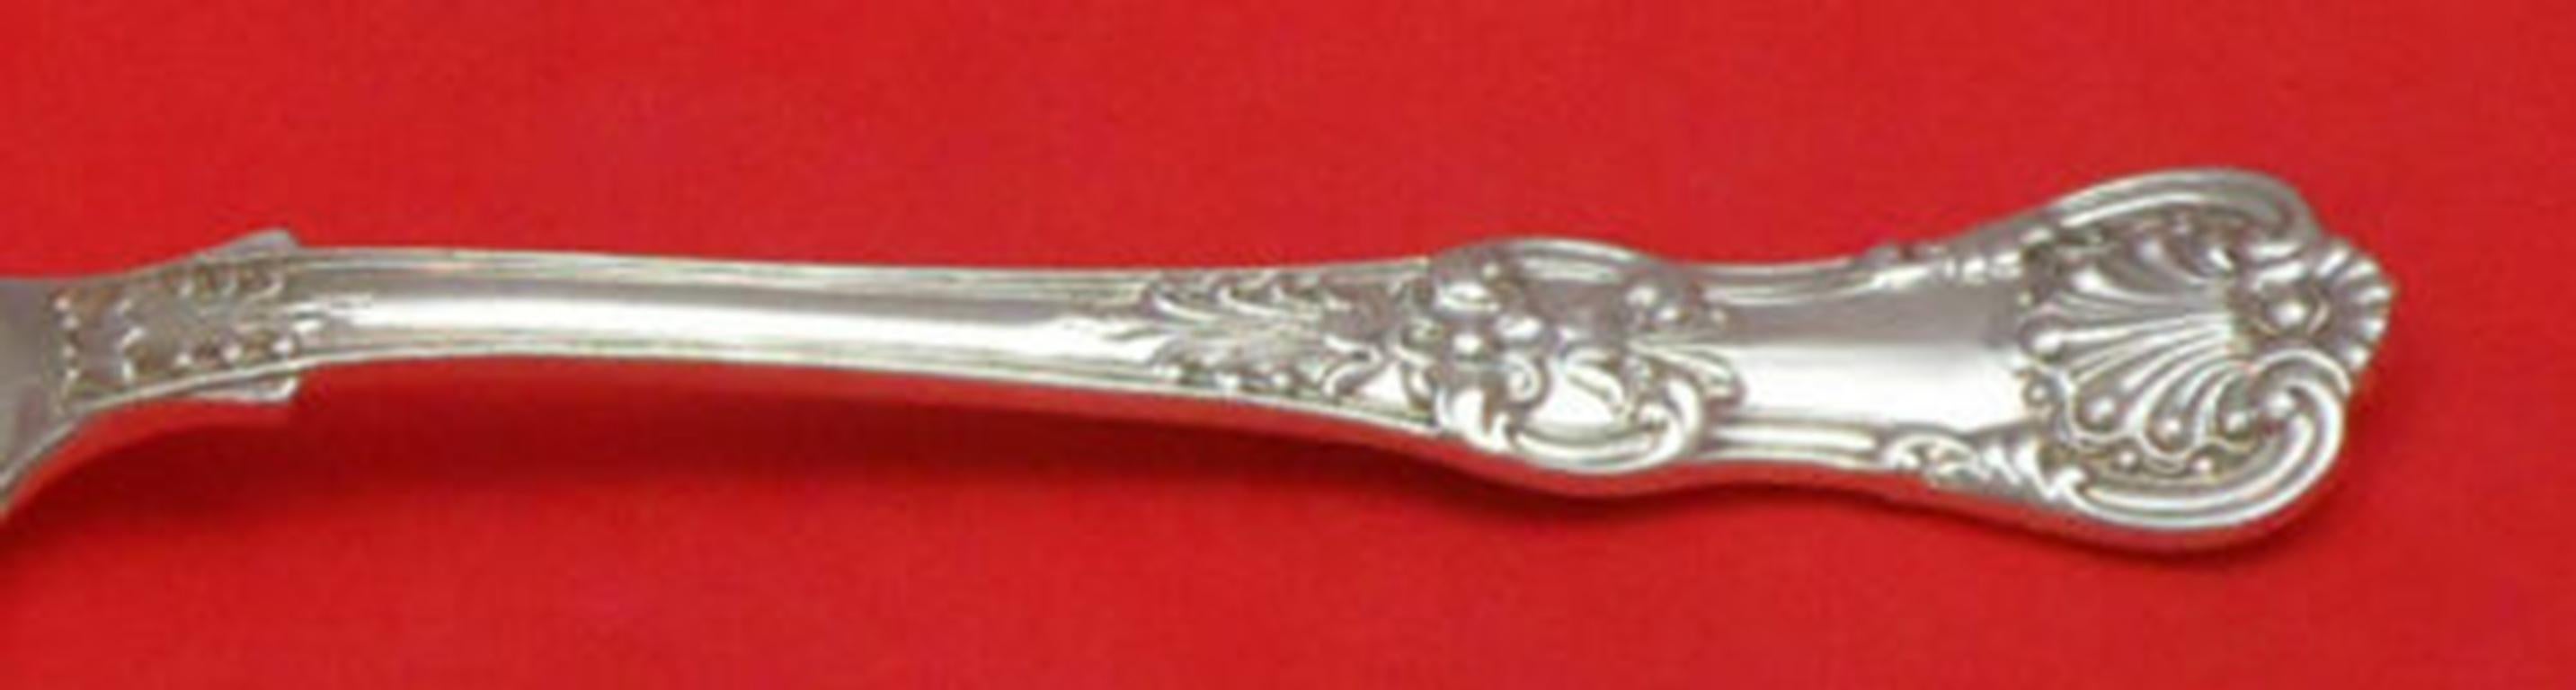 Sterling silver sugar spoon, 5 3/4